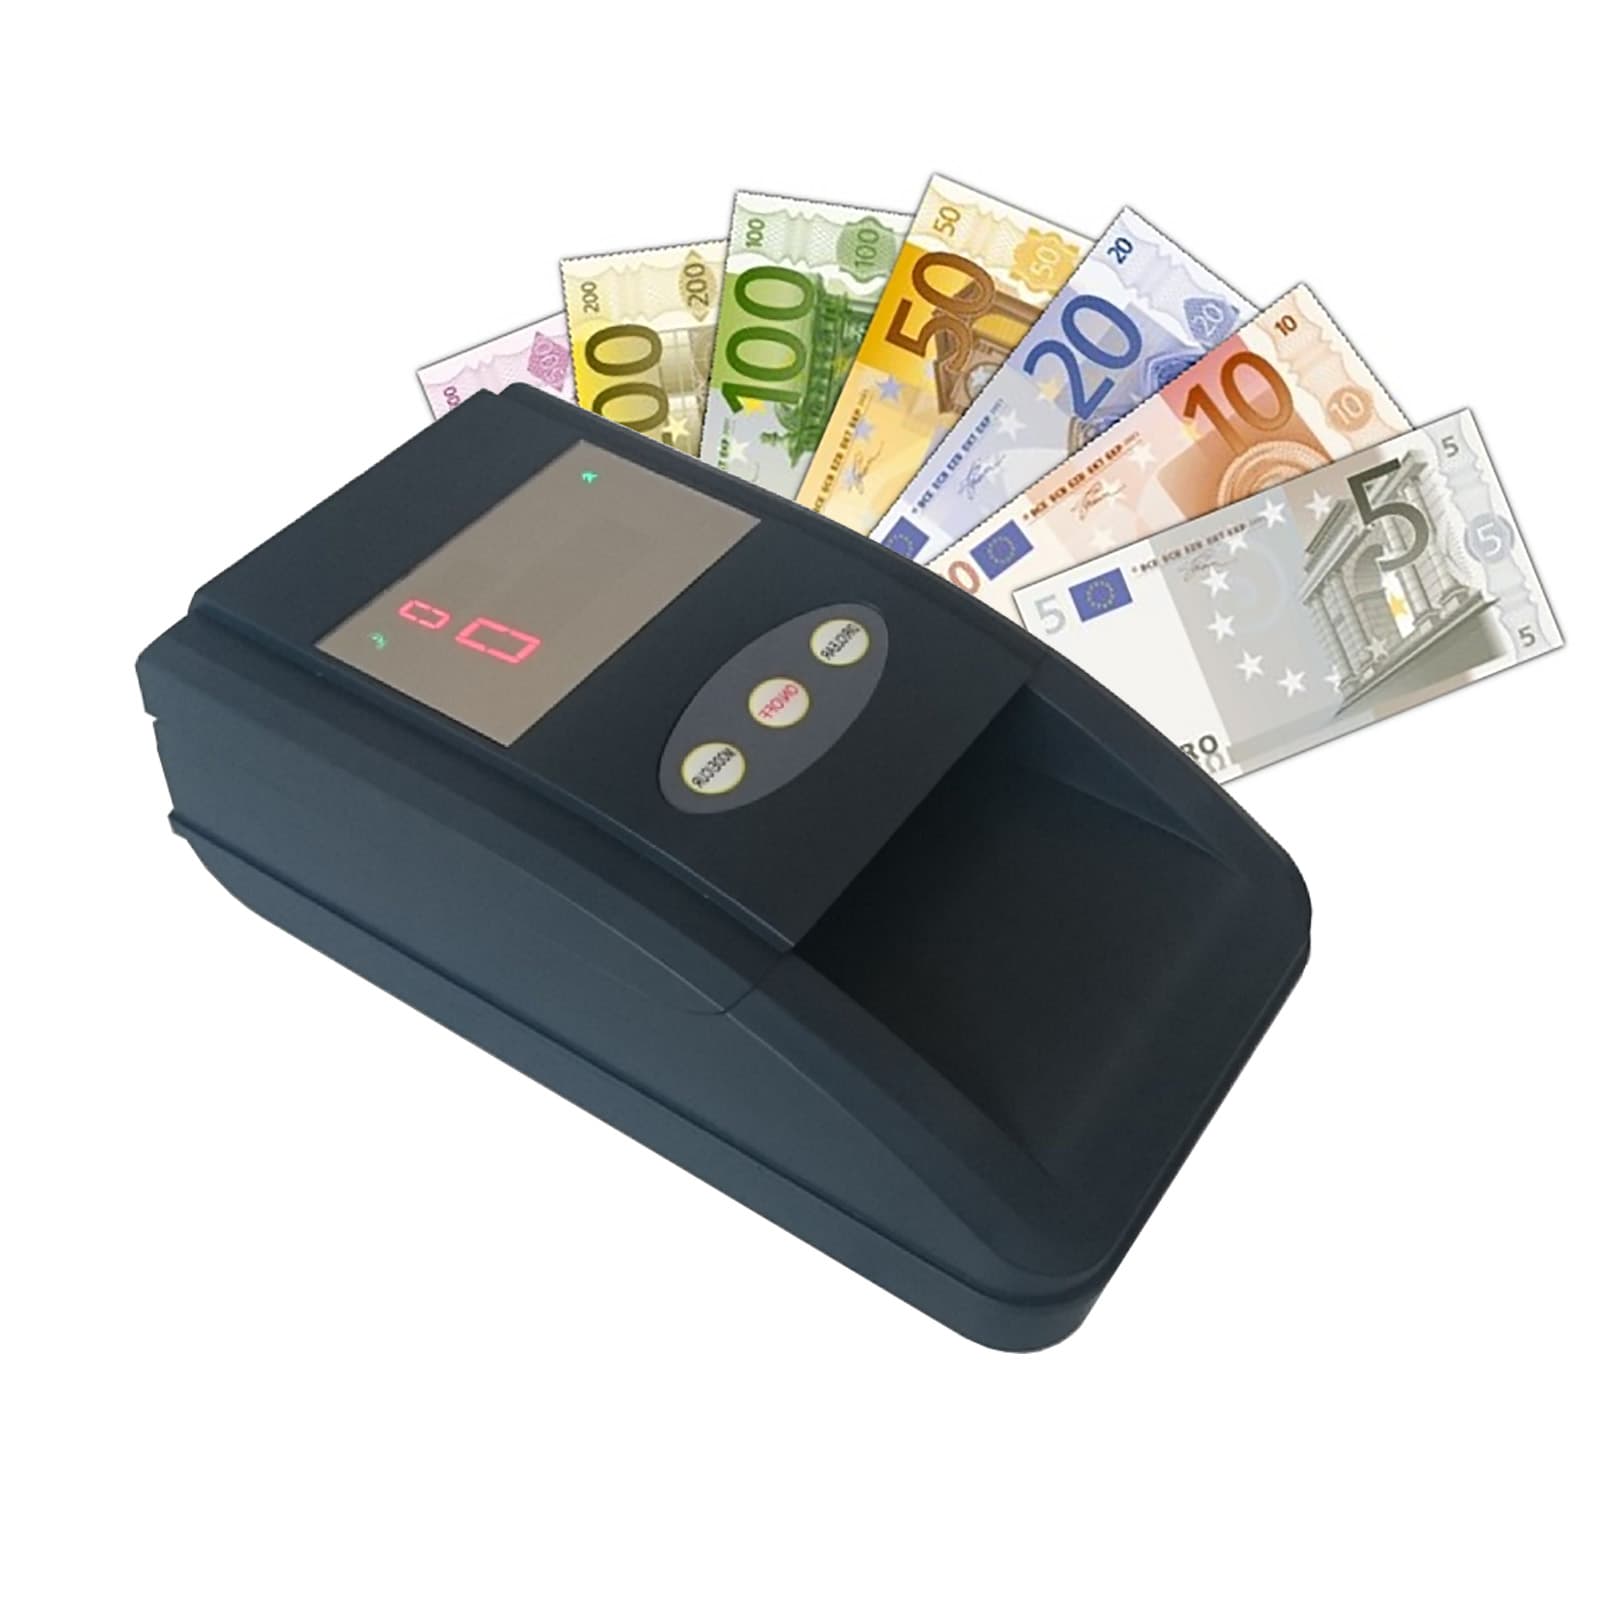 ST-V65 Rileva banconote false certificato BCE Test 100% affidabile